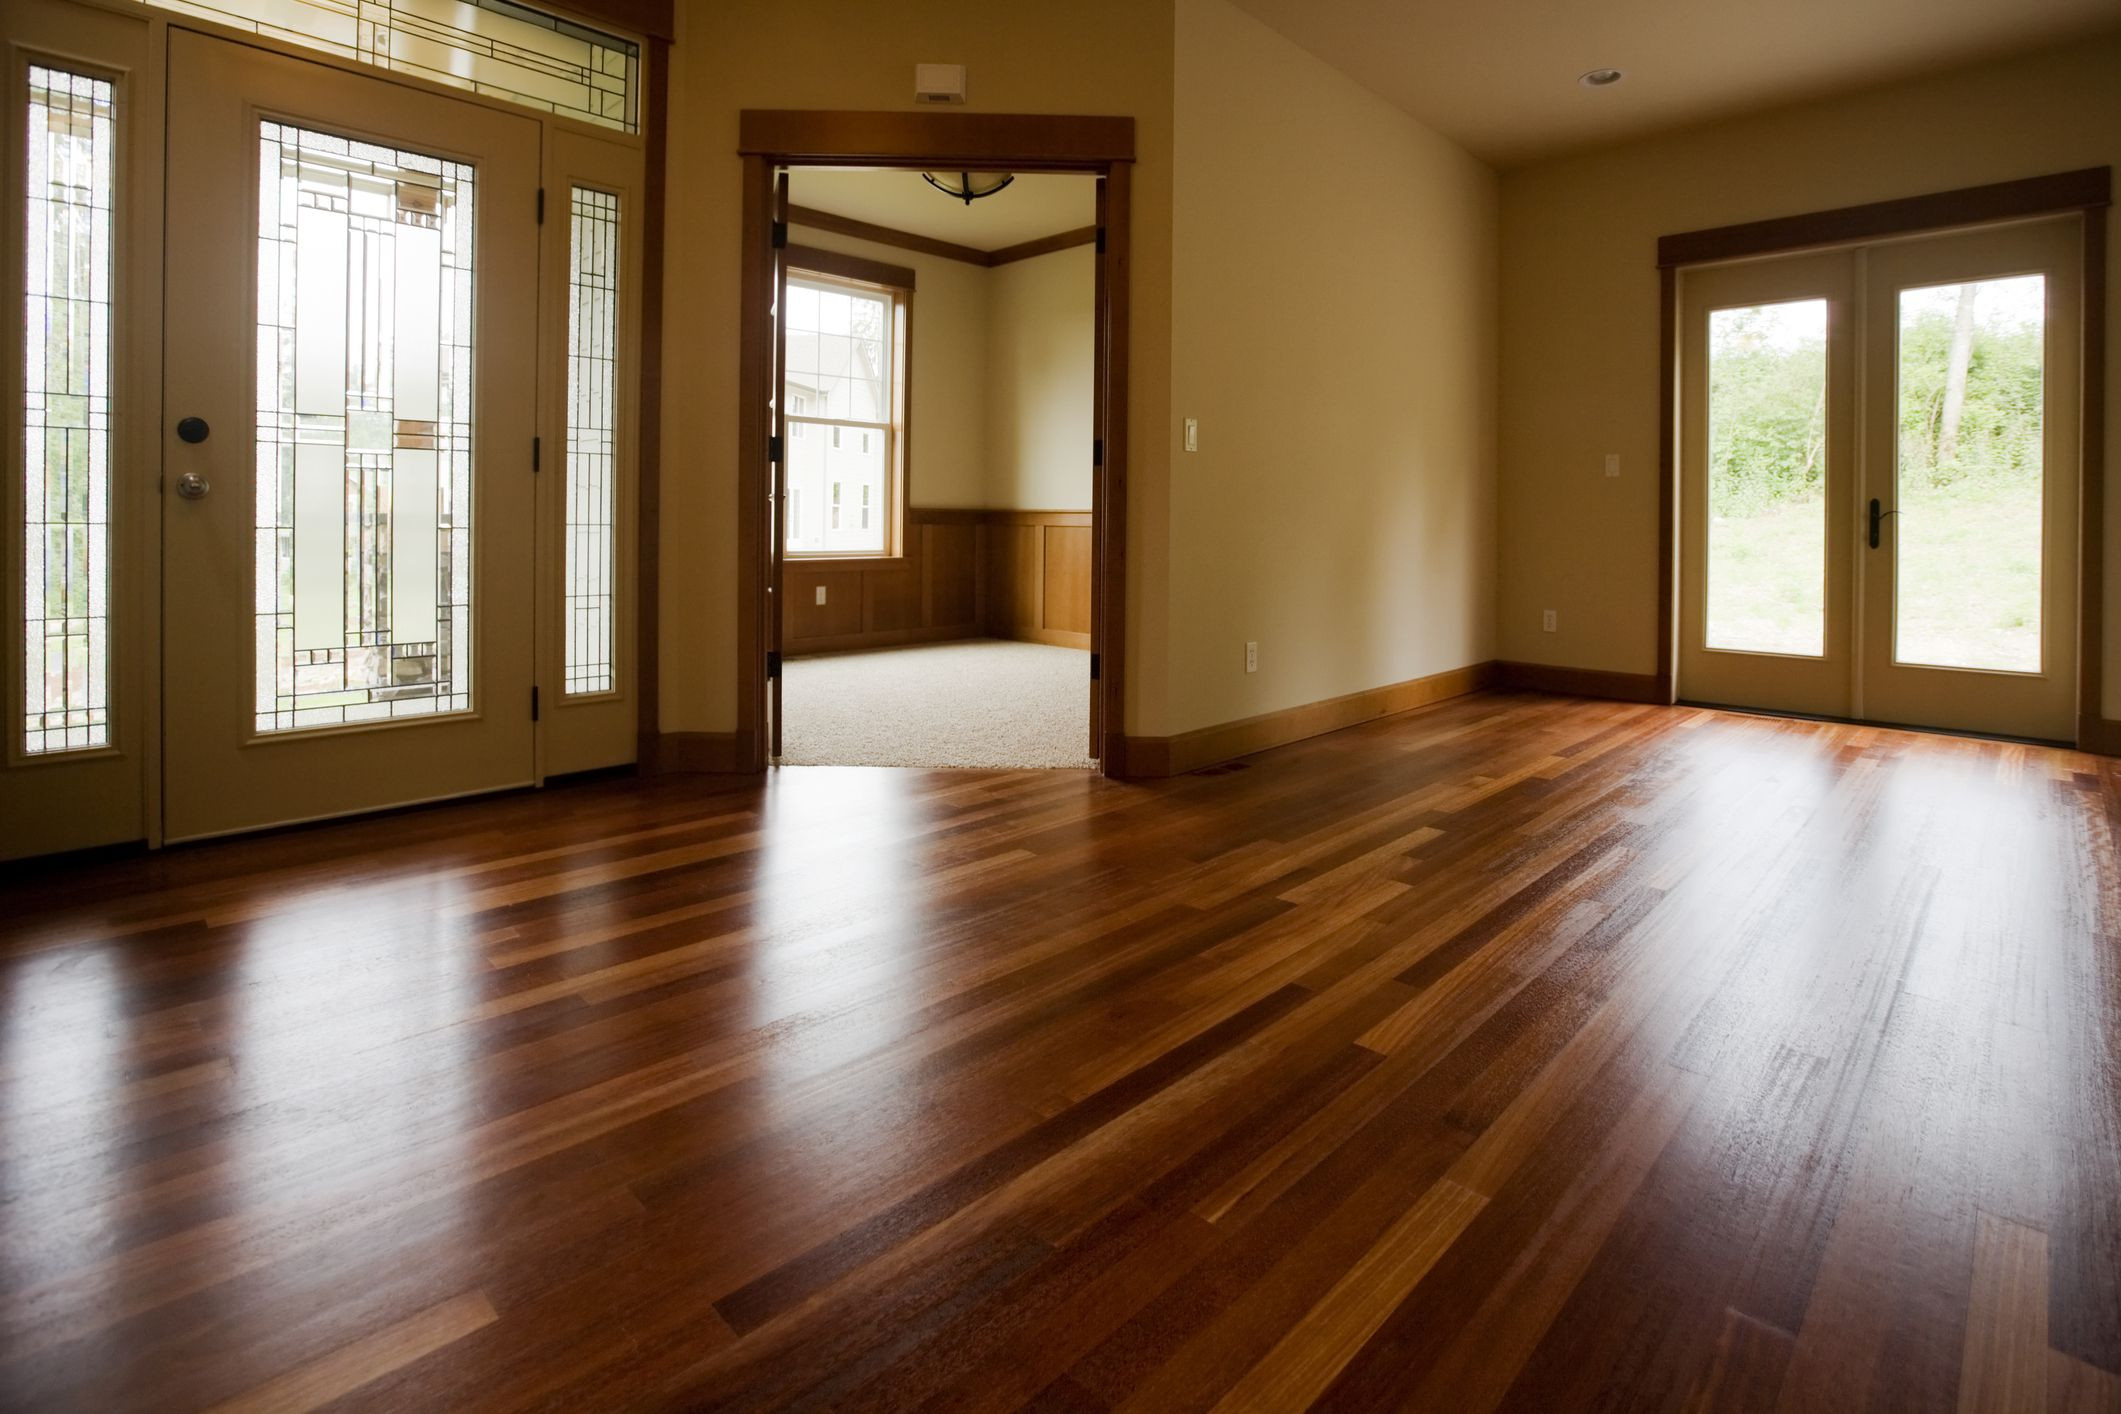 18 Best 3 1 4 White Oak Hardwood Flooring 2022 free download 3 1 4 white oak hardwood flooring of types of hardwood flooring buyers guide regarding gettyimages 157332889 5886d8383df78c2ccd65d4e1